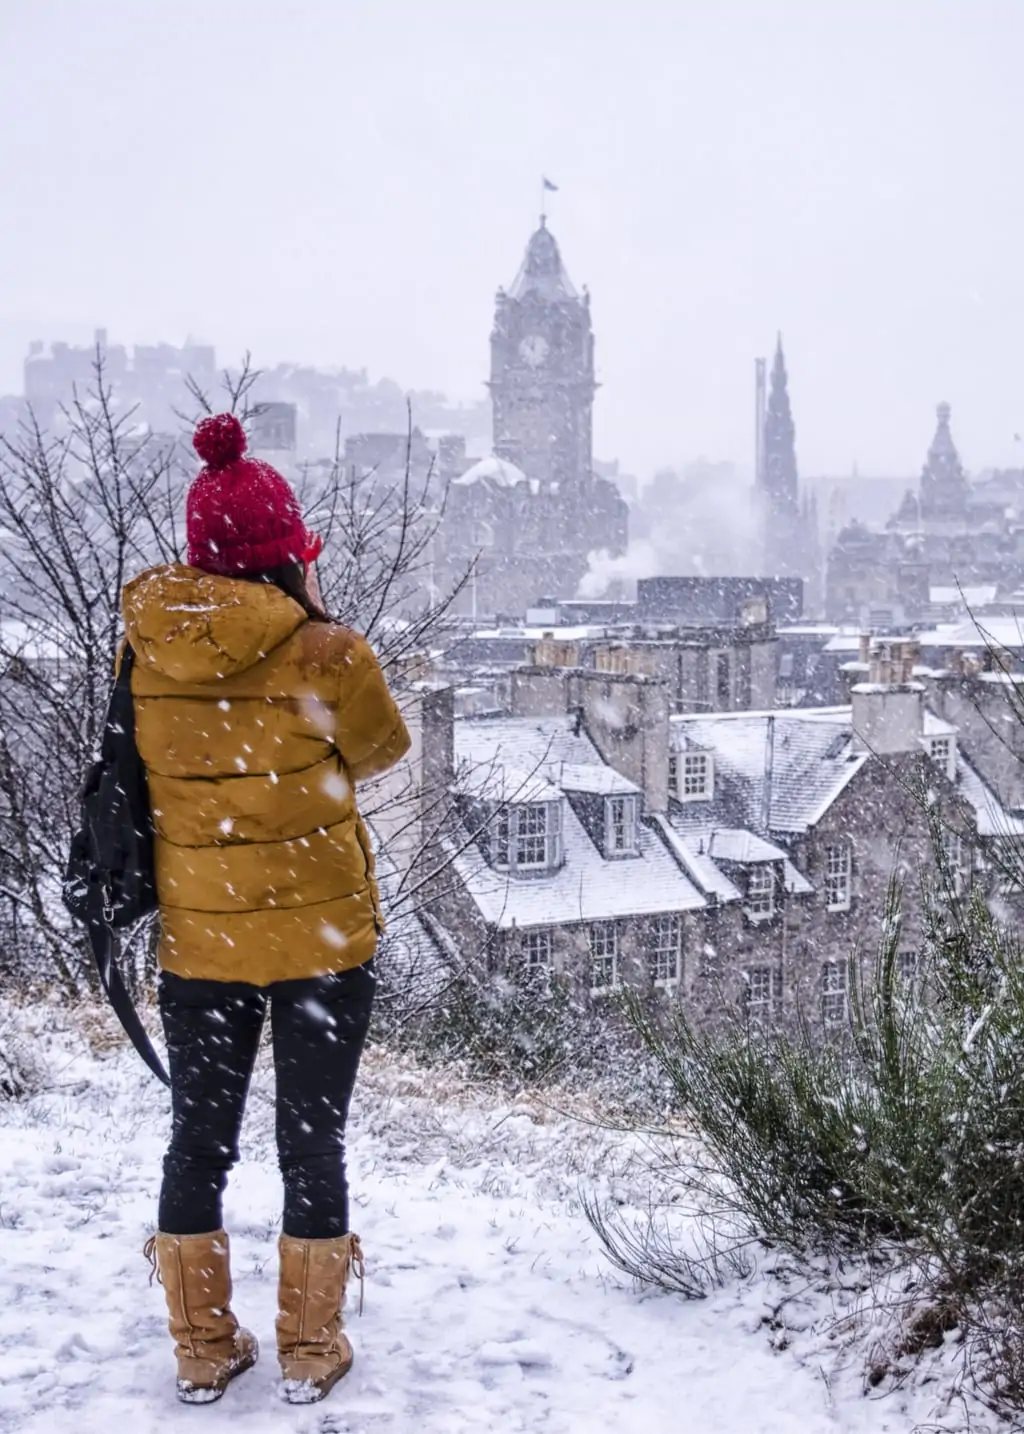 Edinburgh covered in snow